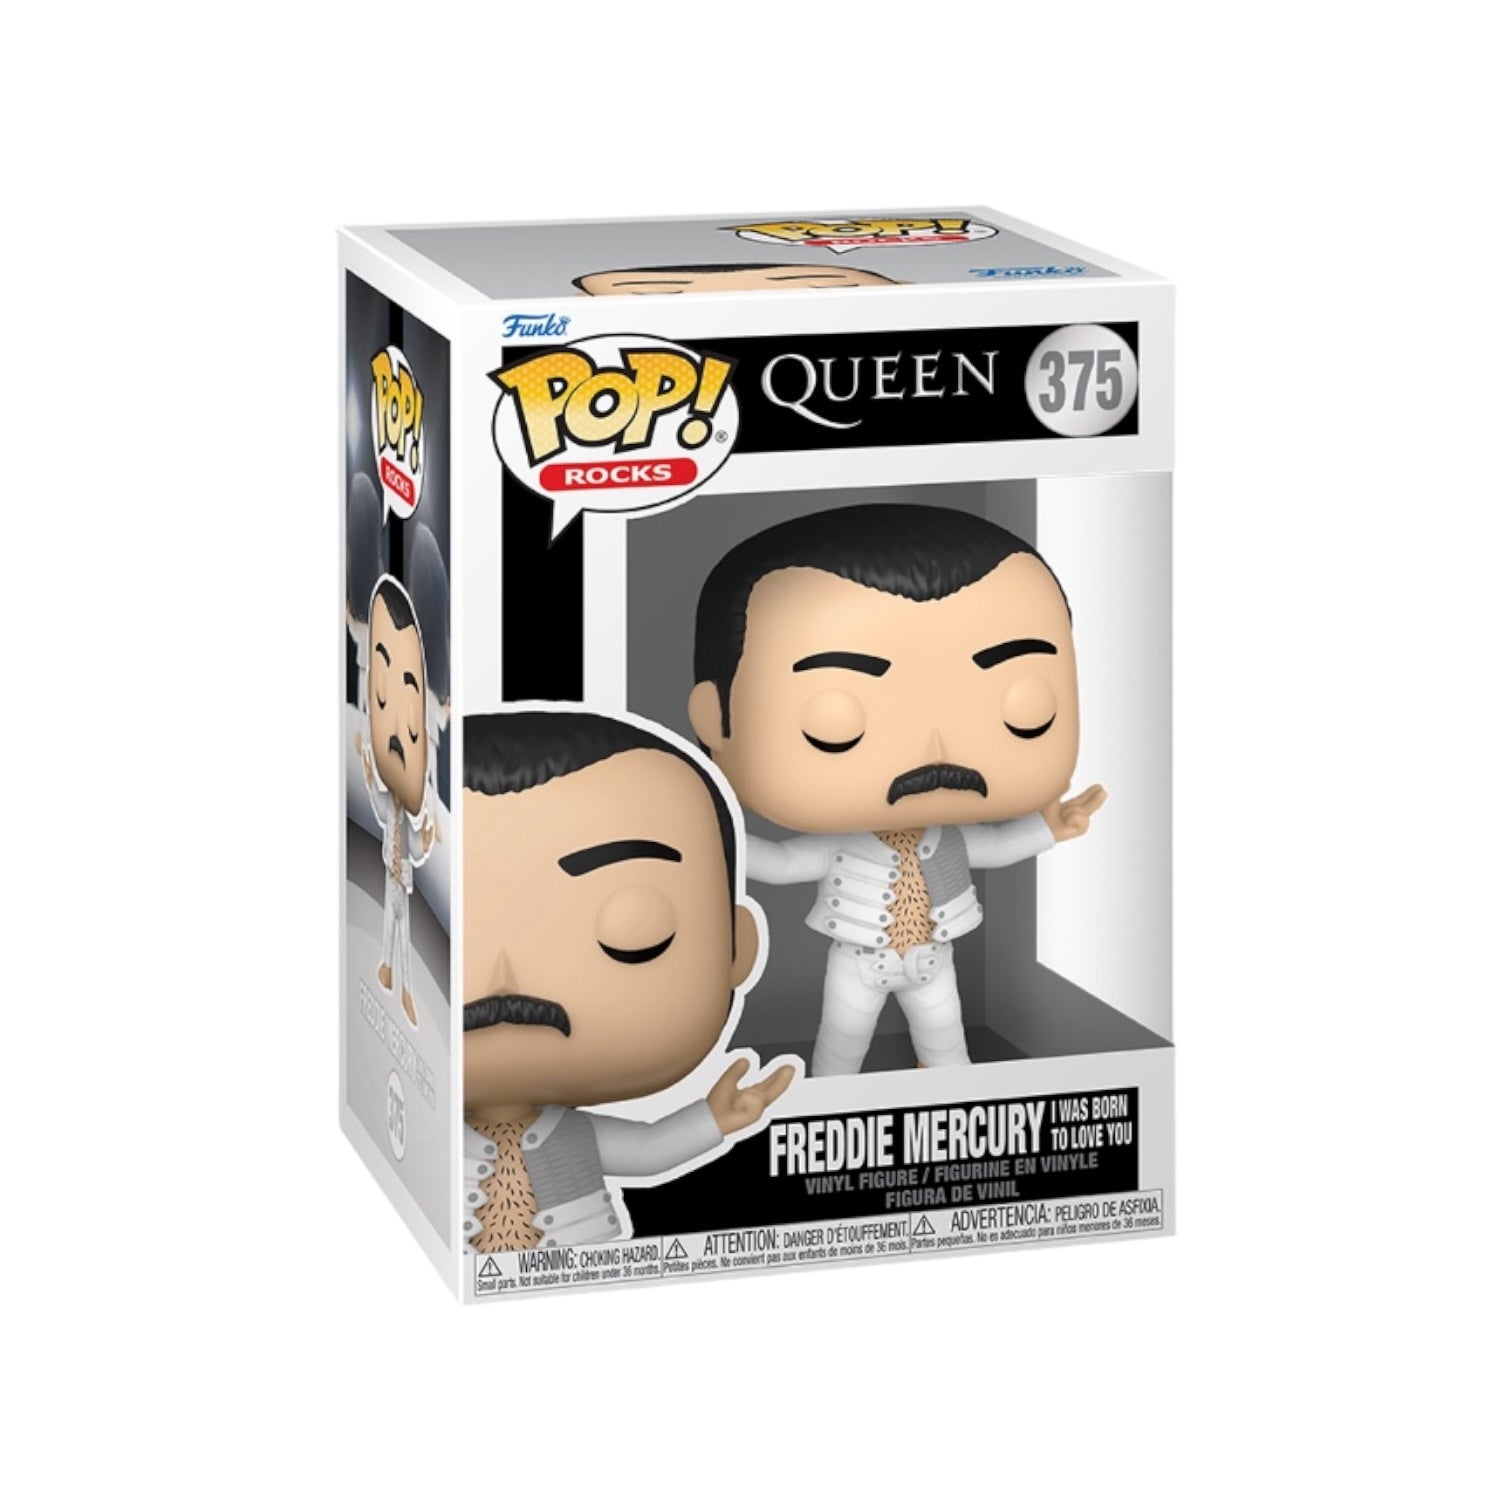 Freddie Mercury (I was born to love you) #375 Funko Pop! - Queen